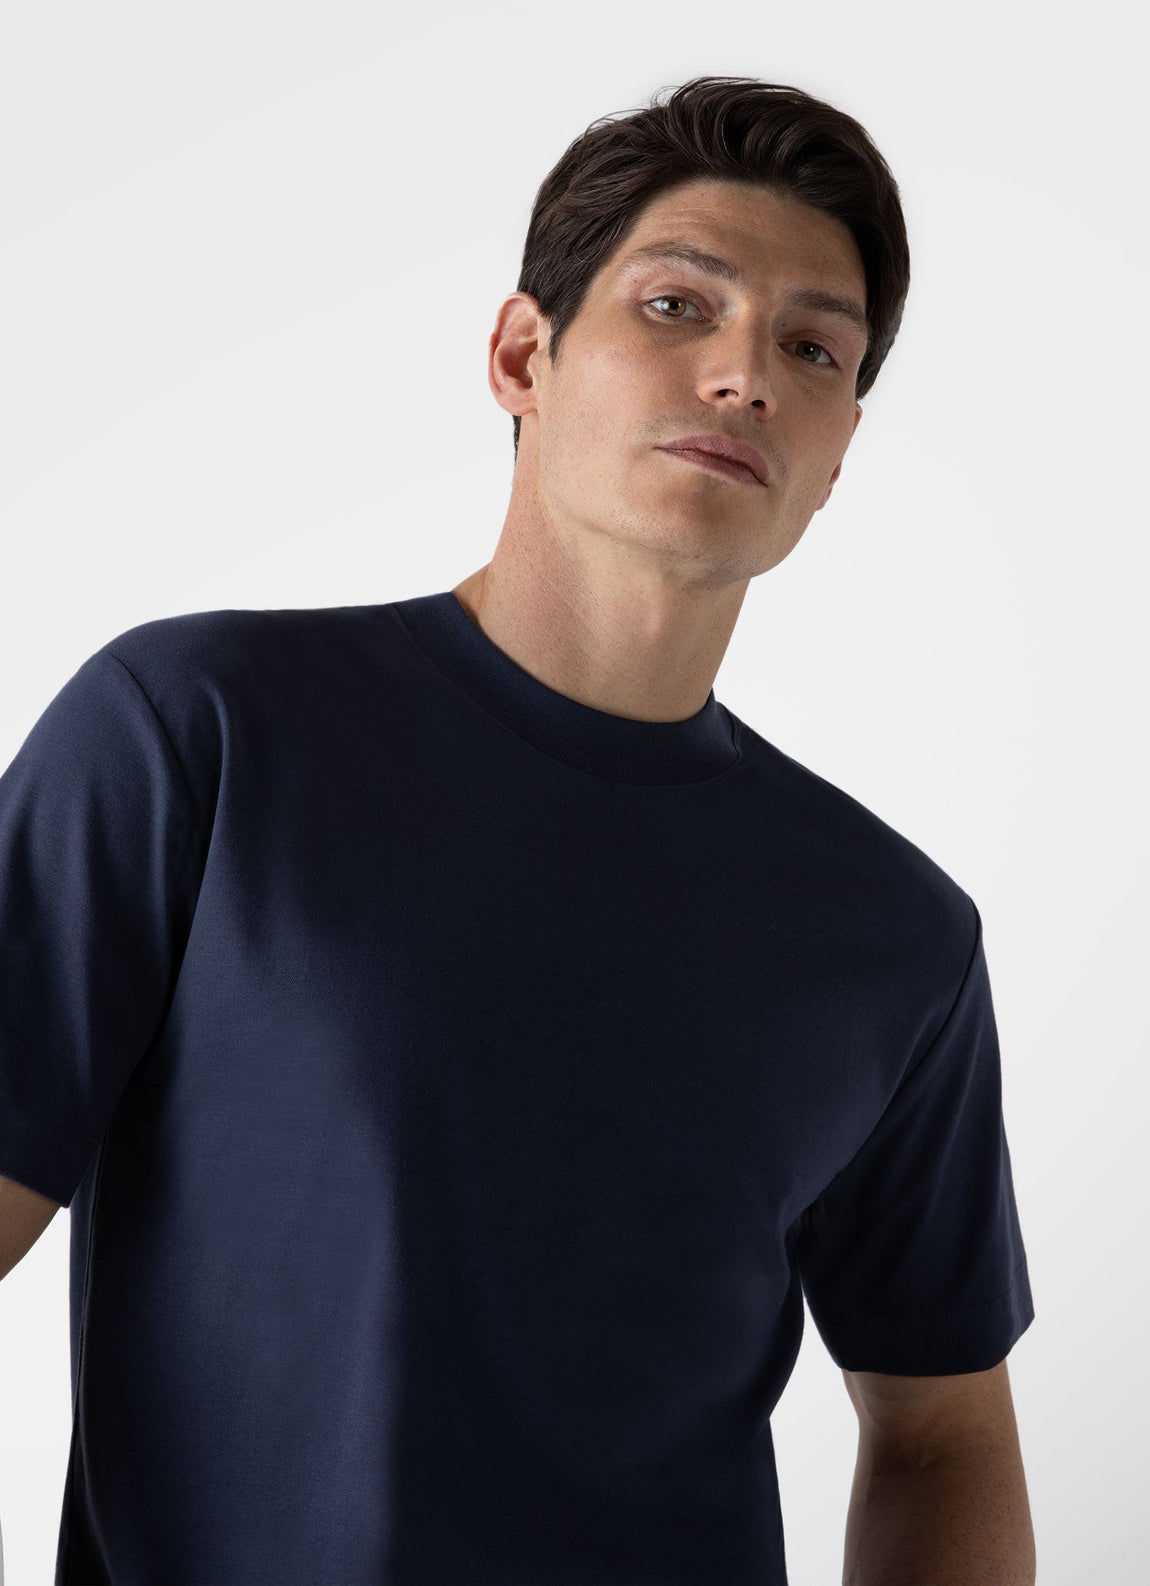 Men's Brushed Cotton T-shirt in Navy